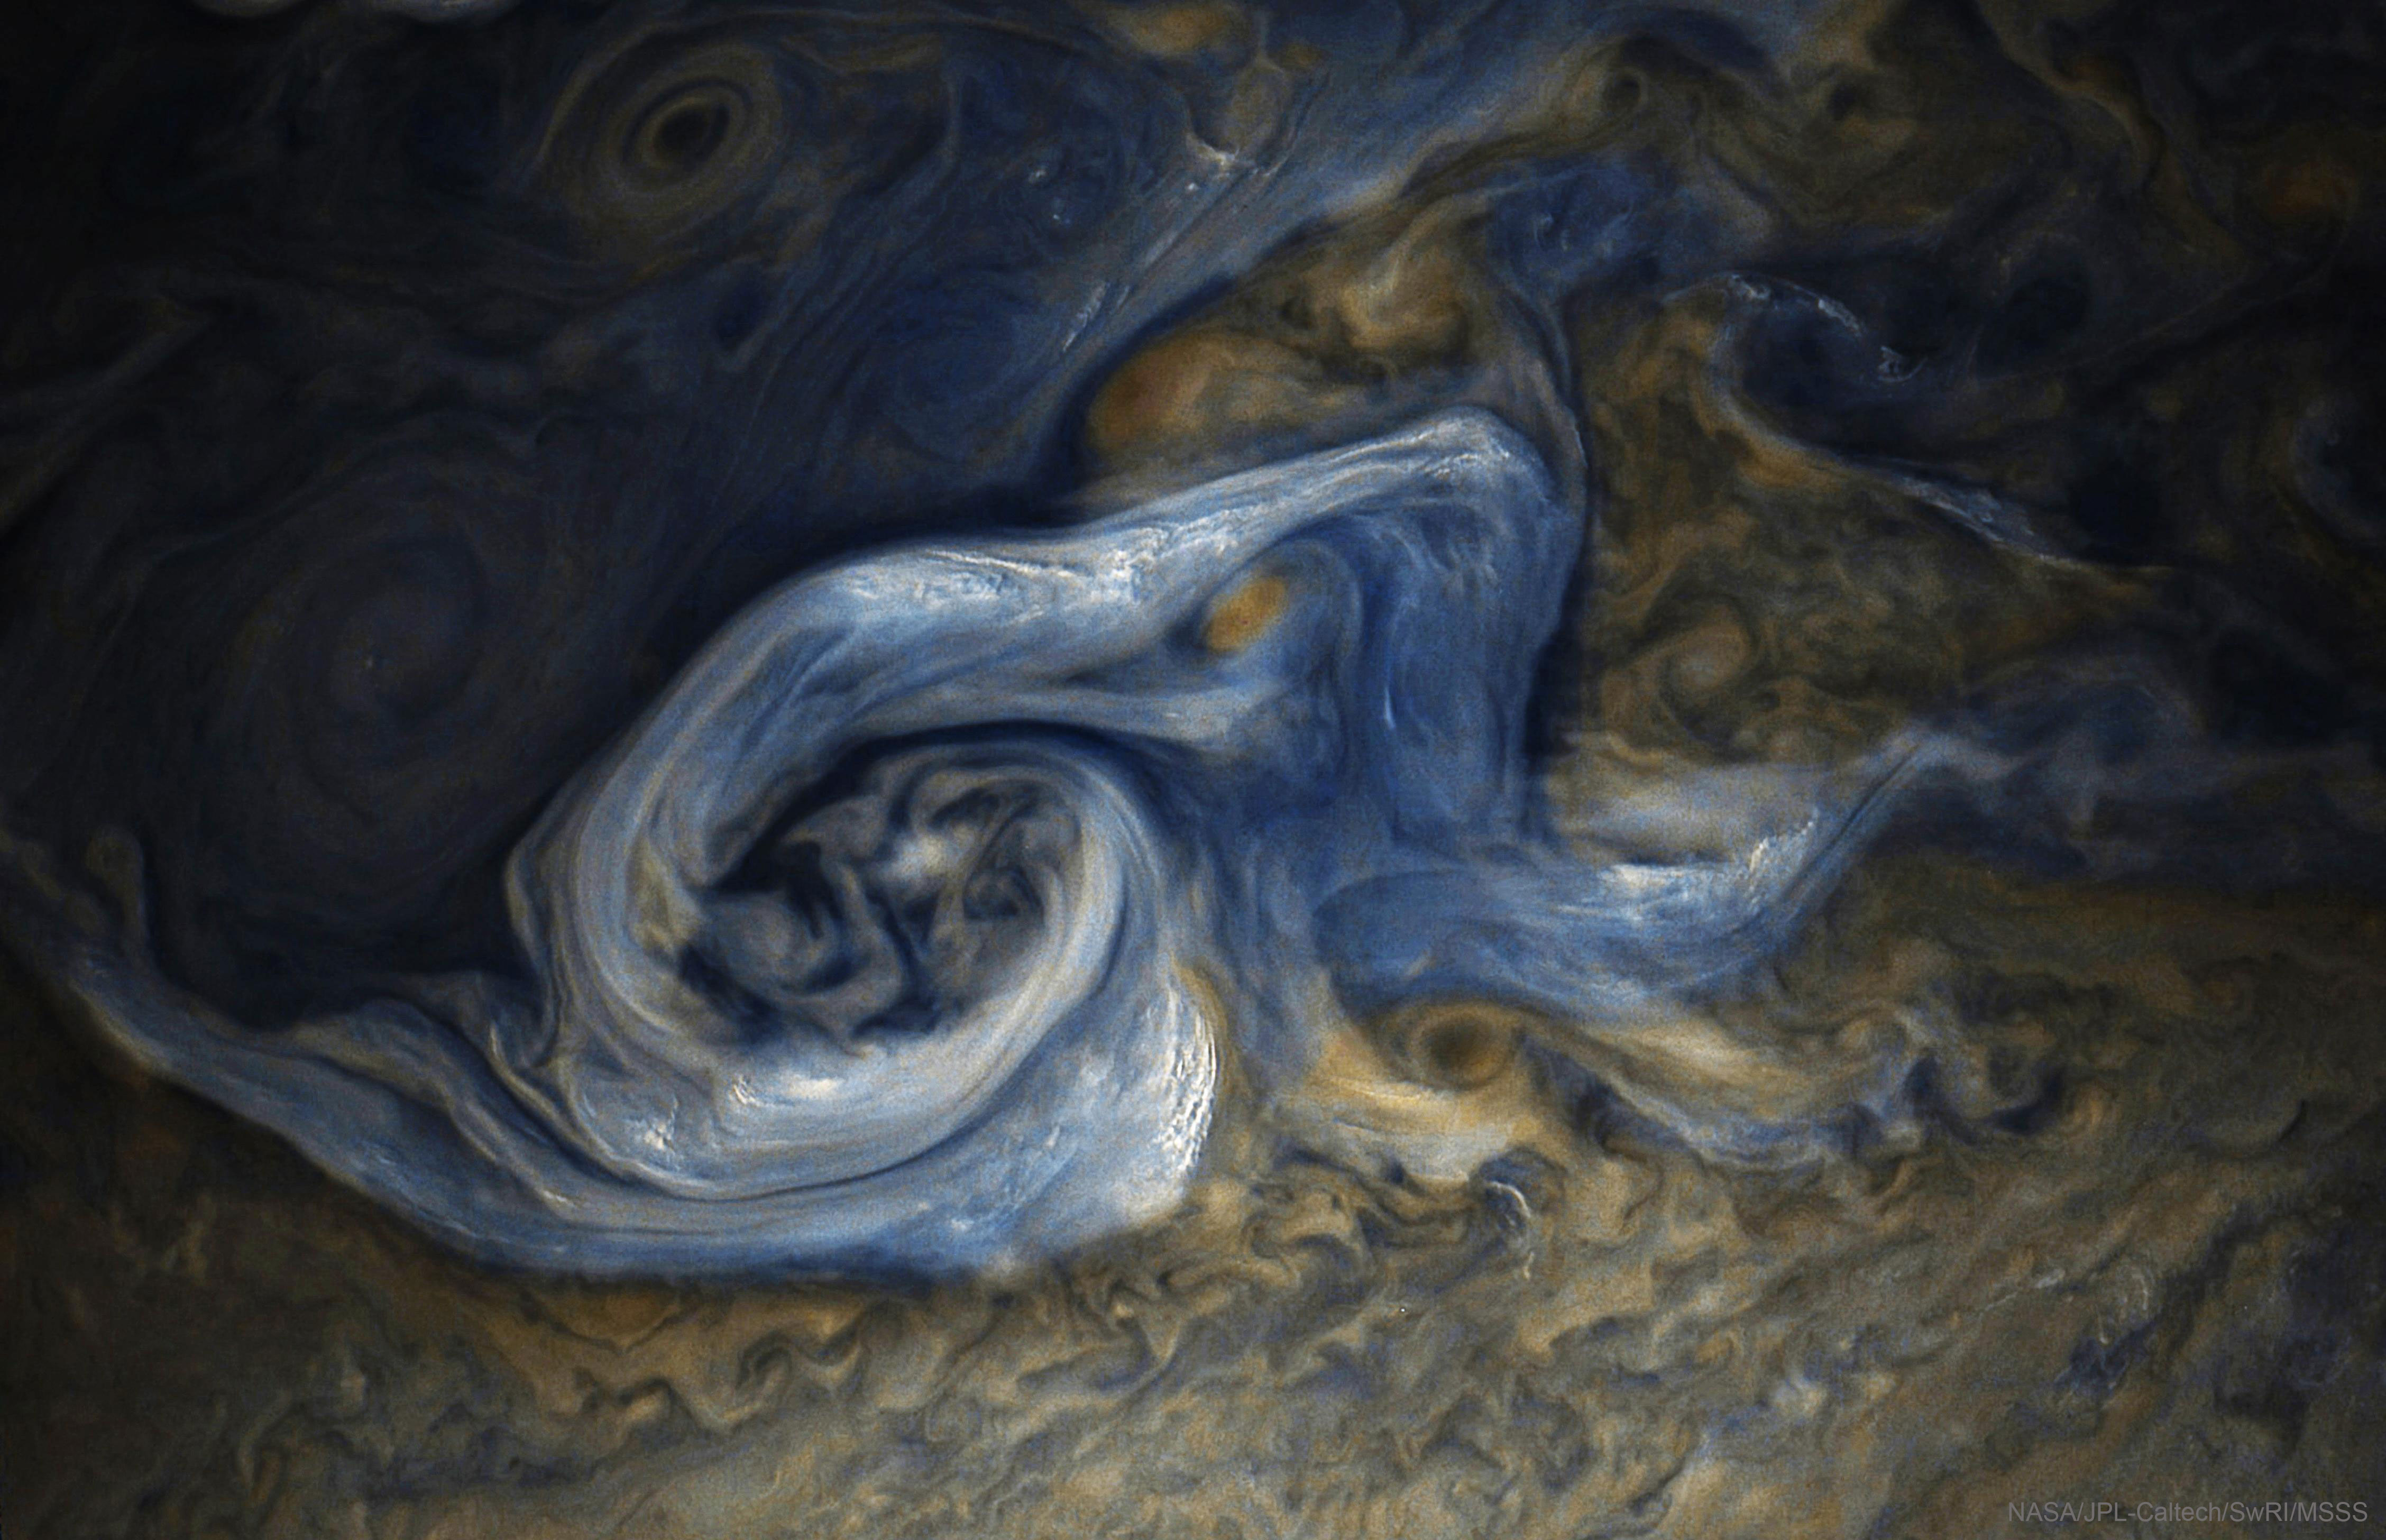 Juno Spots a Complex Storm on Jupiter